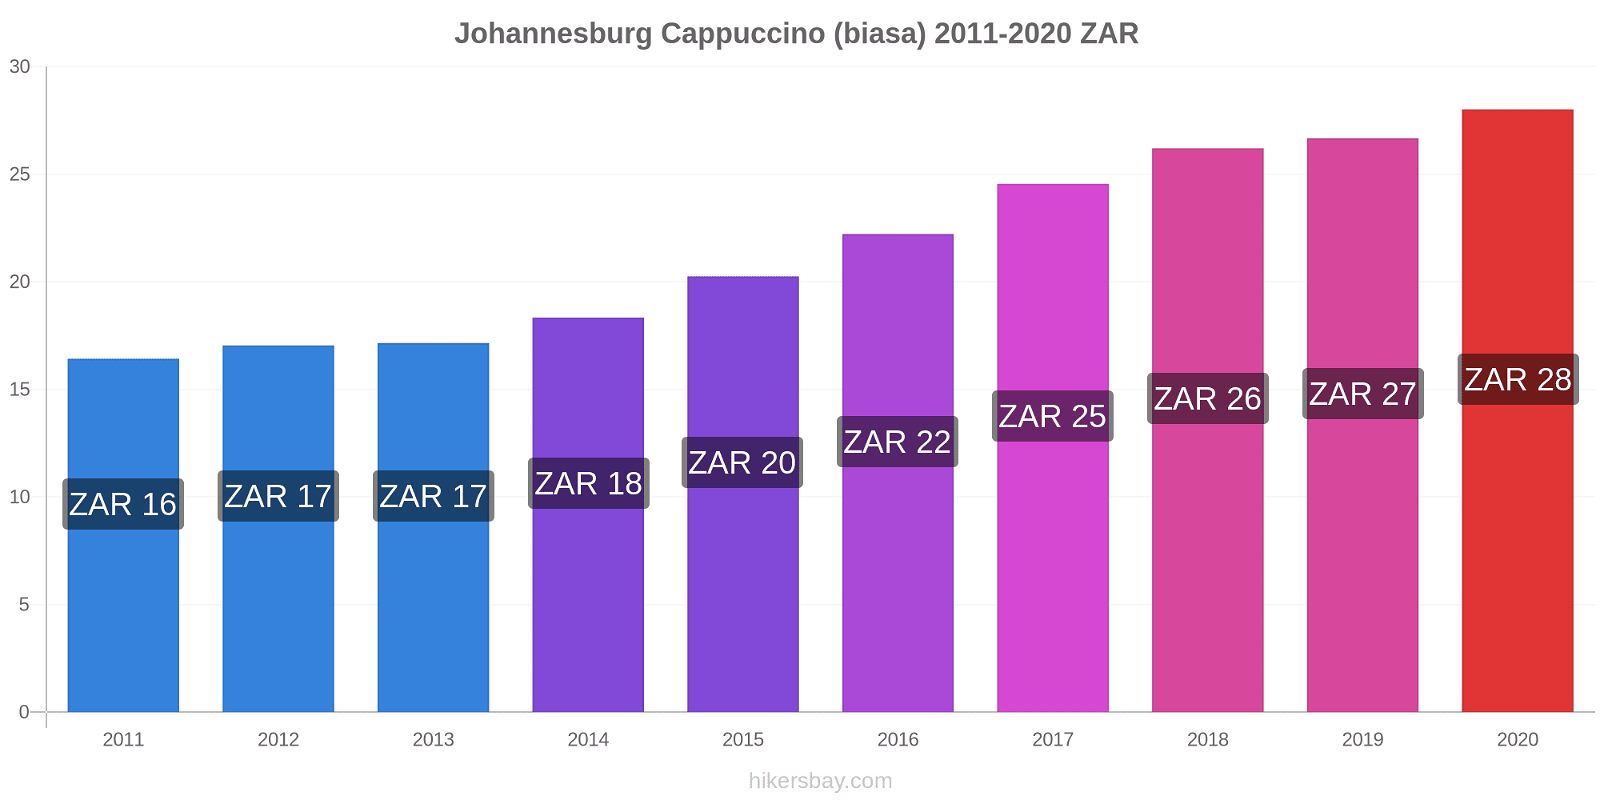 Johannesburg perubahan harga Cappuccino (biasa) hikersbay.com